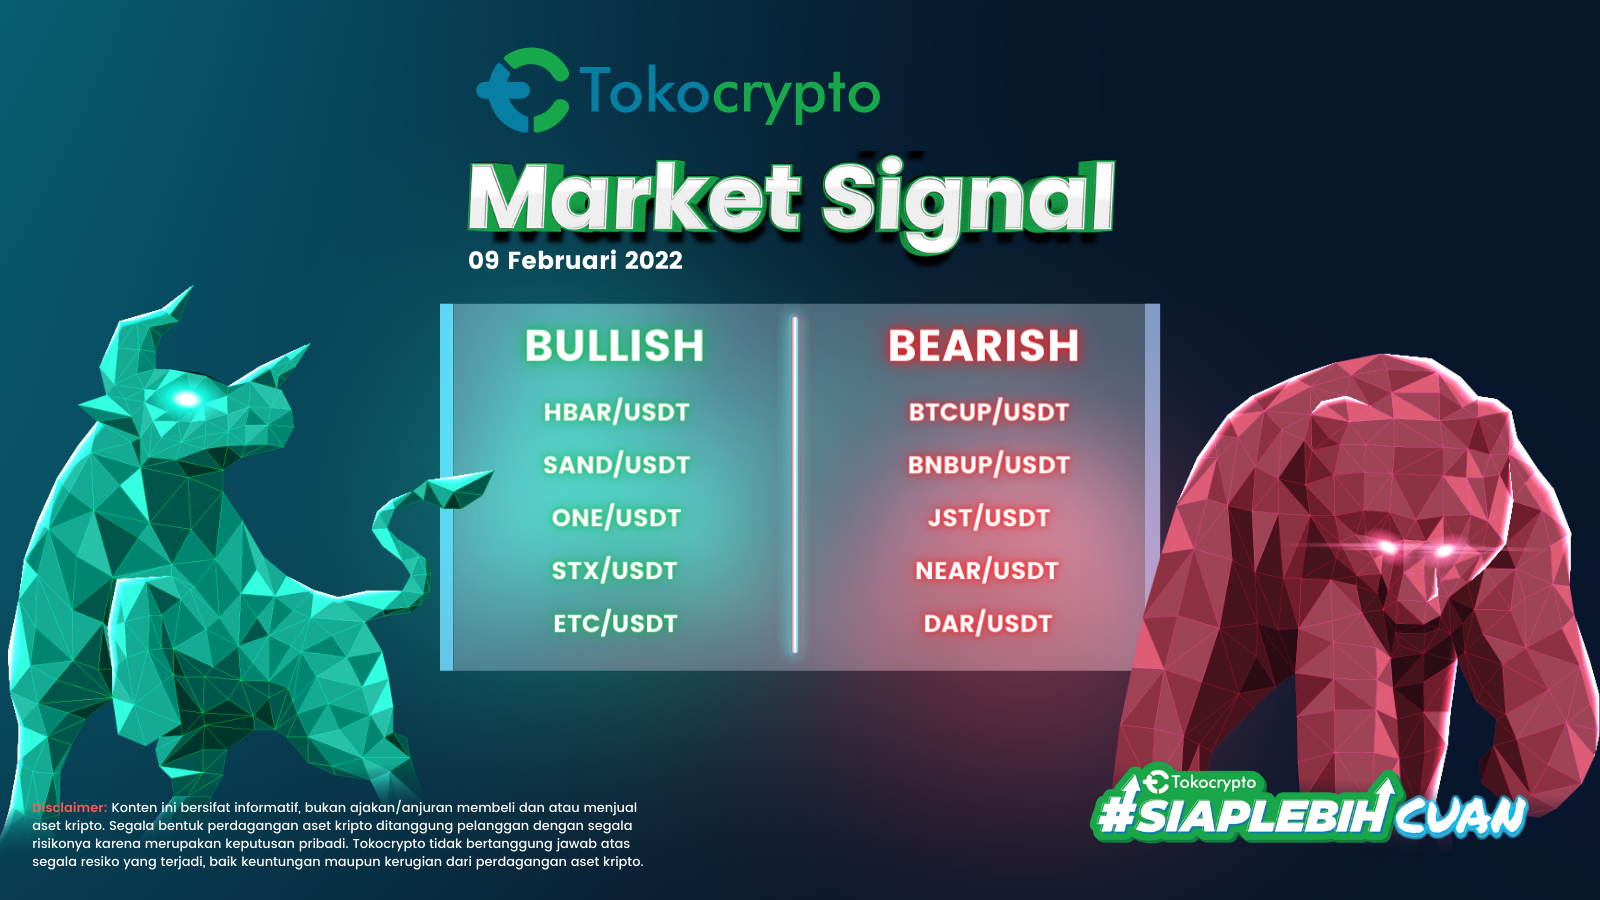 Tokocrypto Market Signal